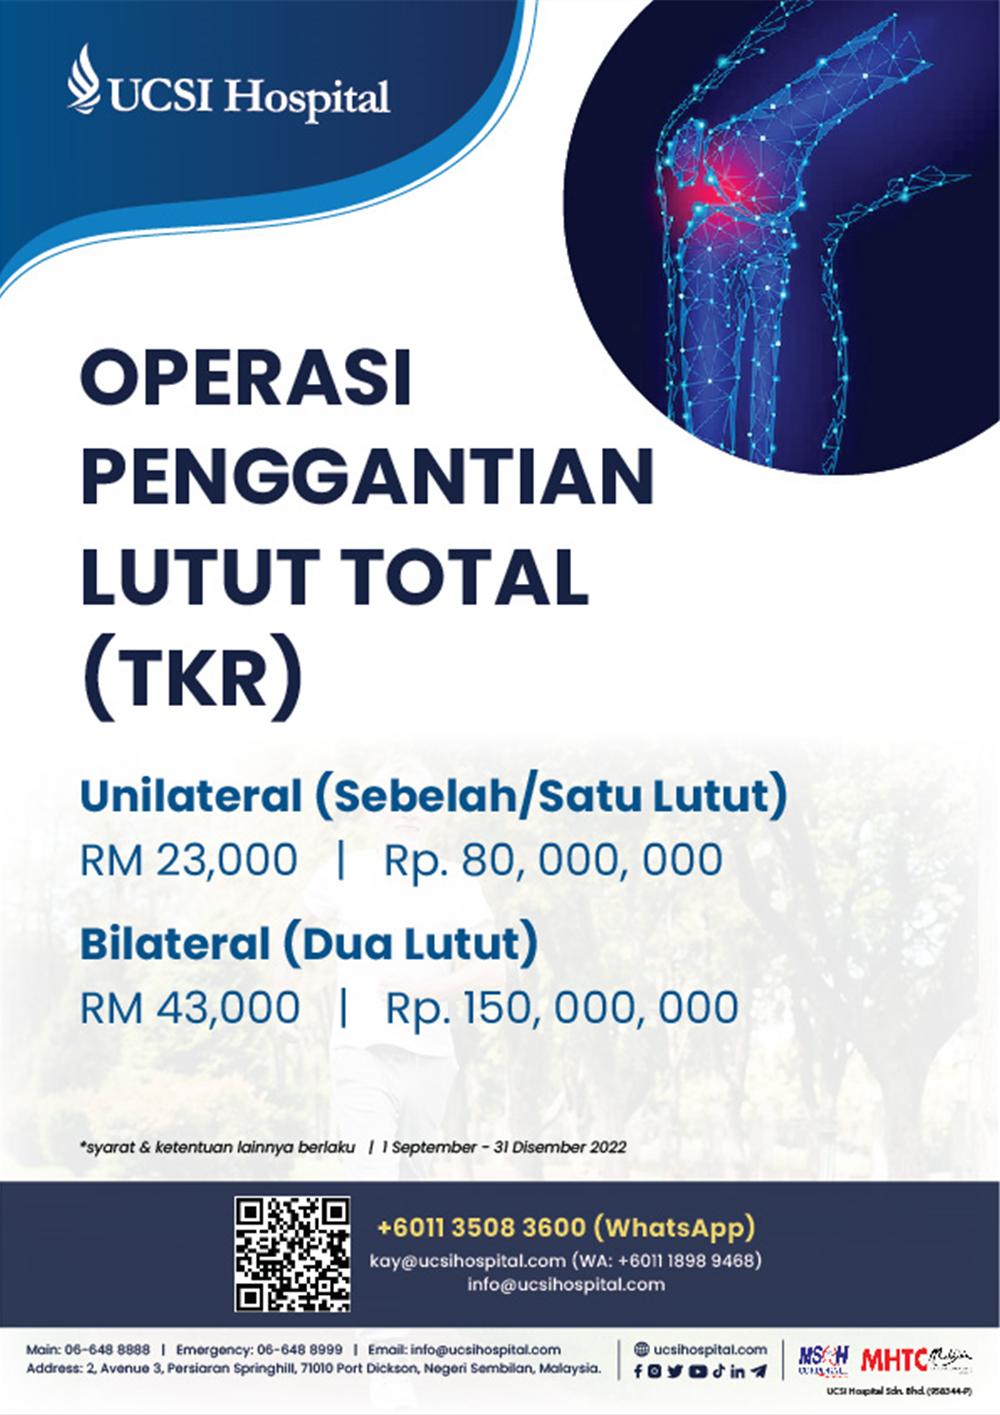 Operasi Penggantian Lutut Total (TKR)